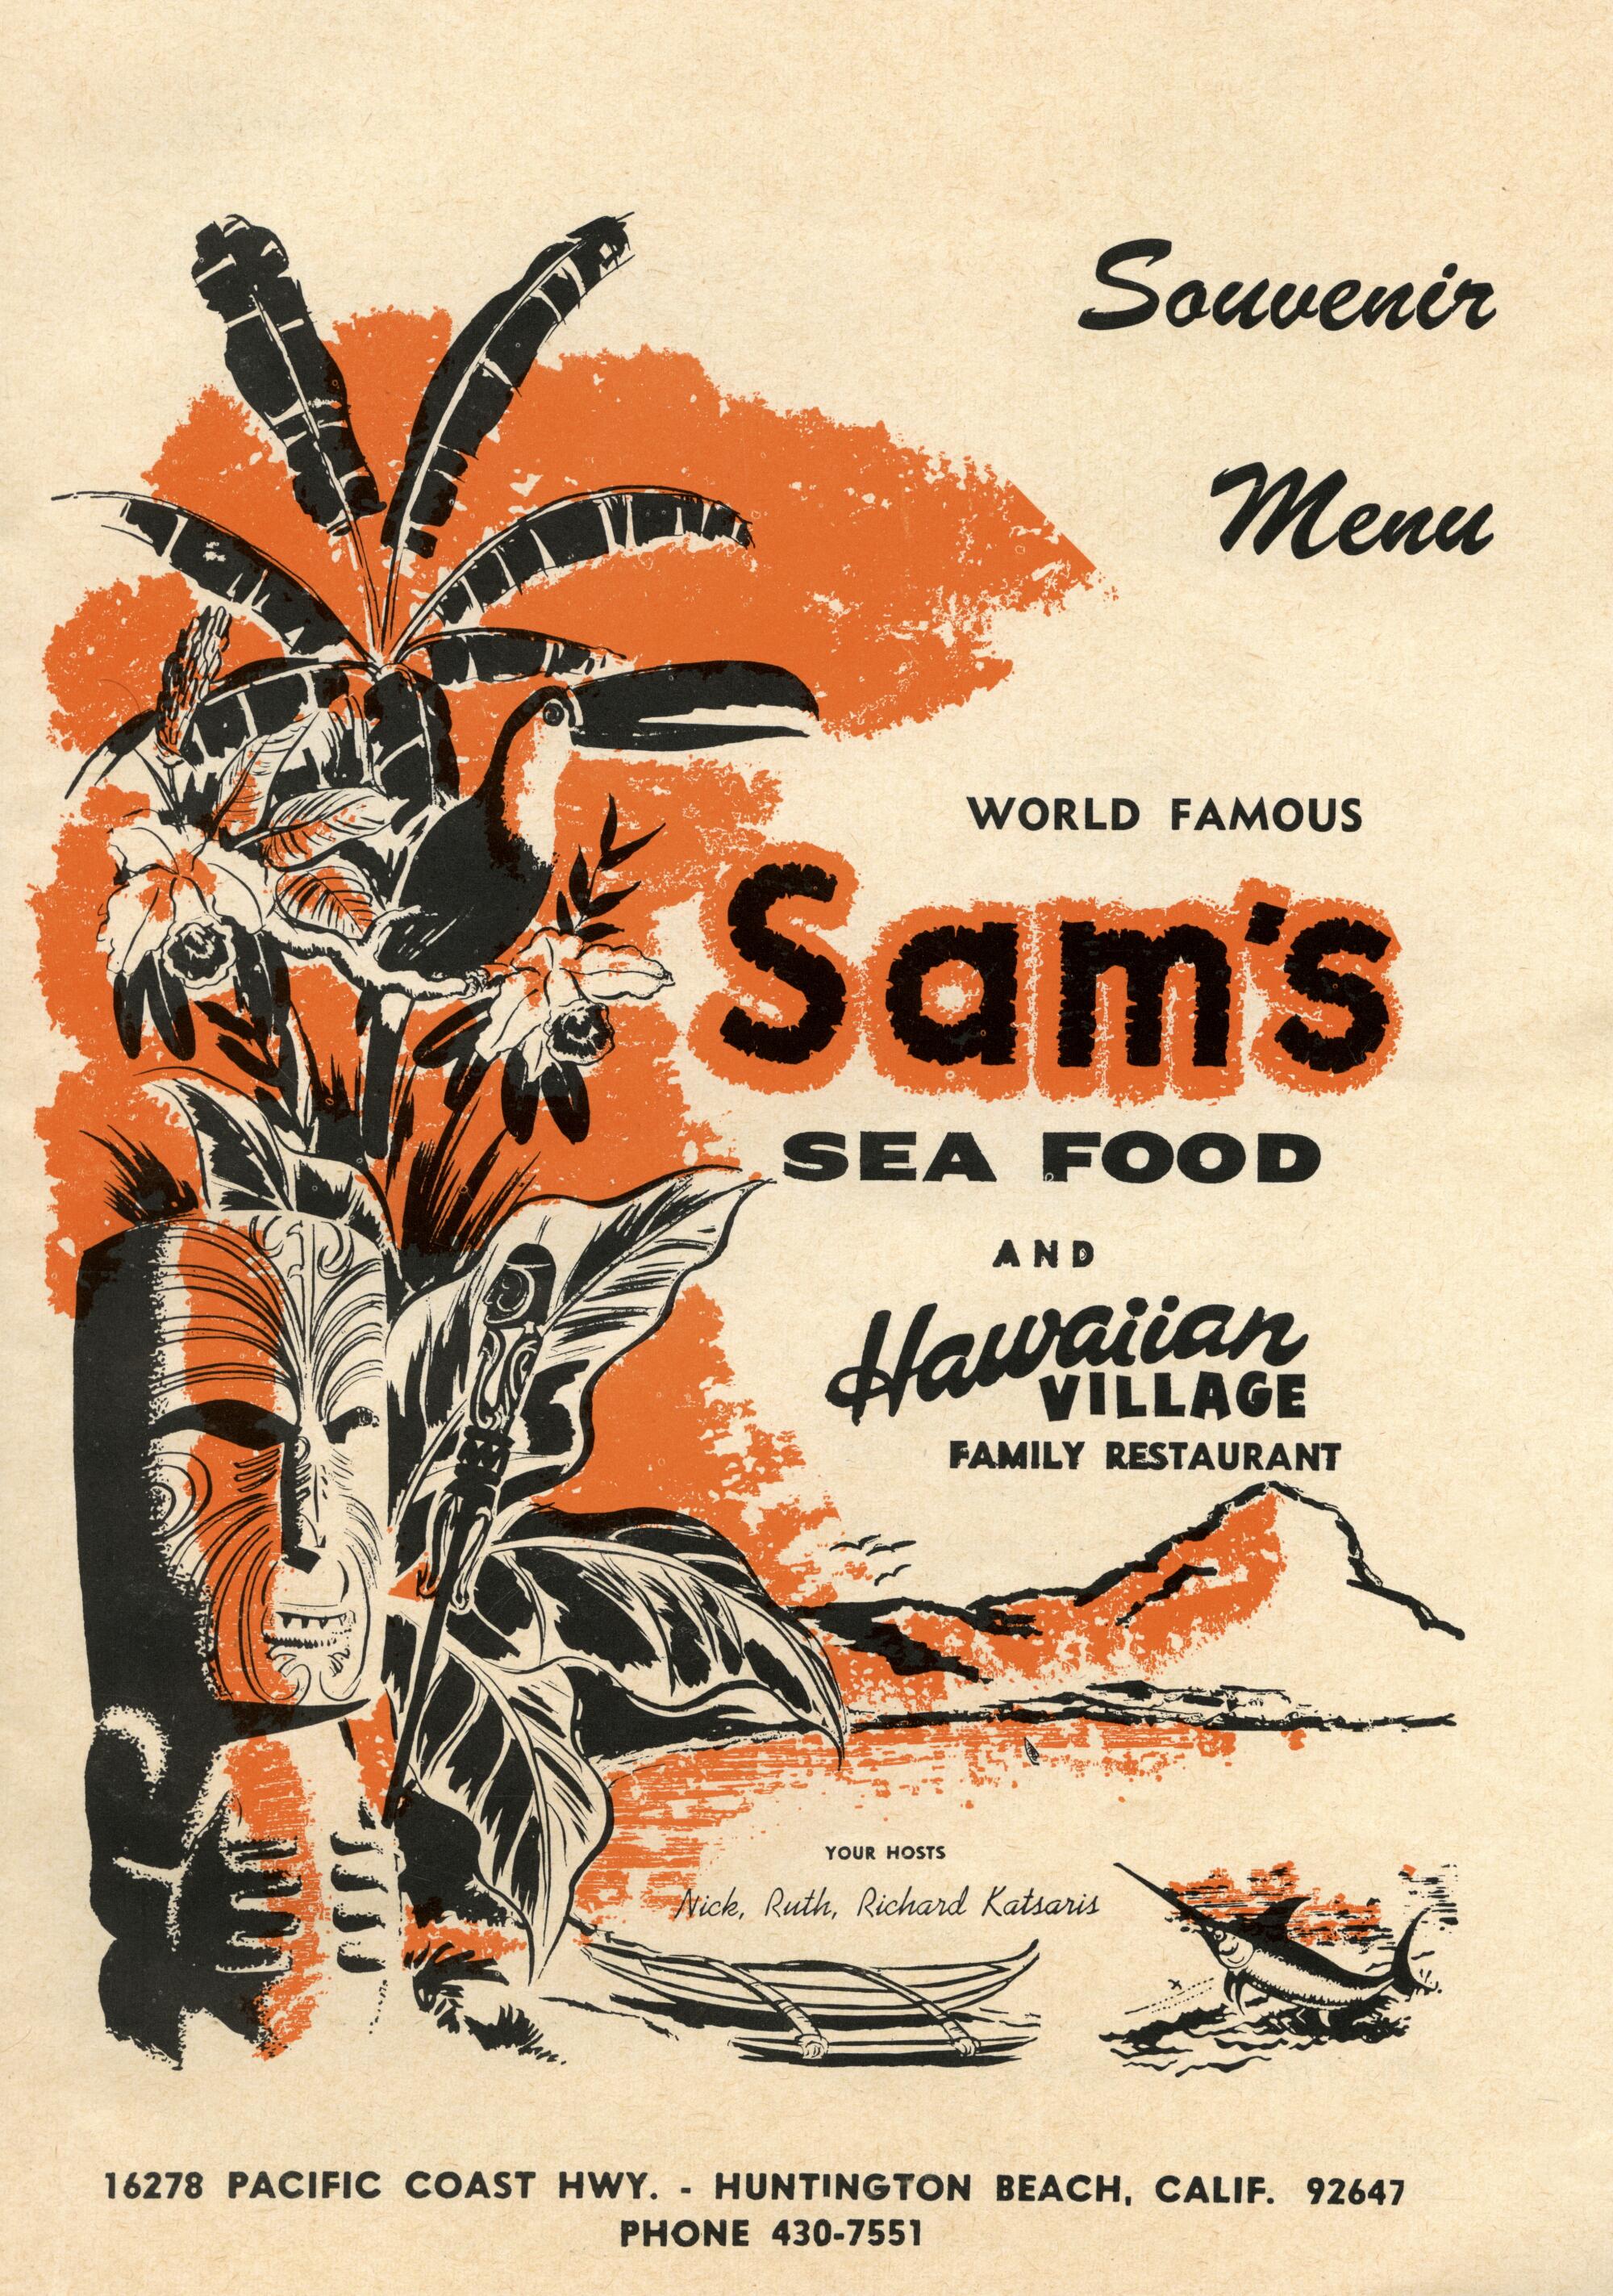 A menu for Sam's Sea Food and Hawaiian Village Restaurant.